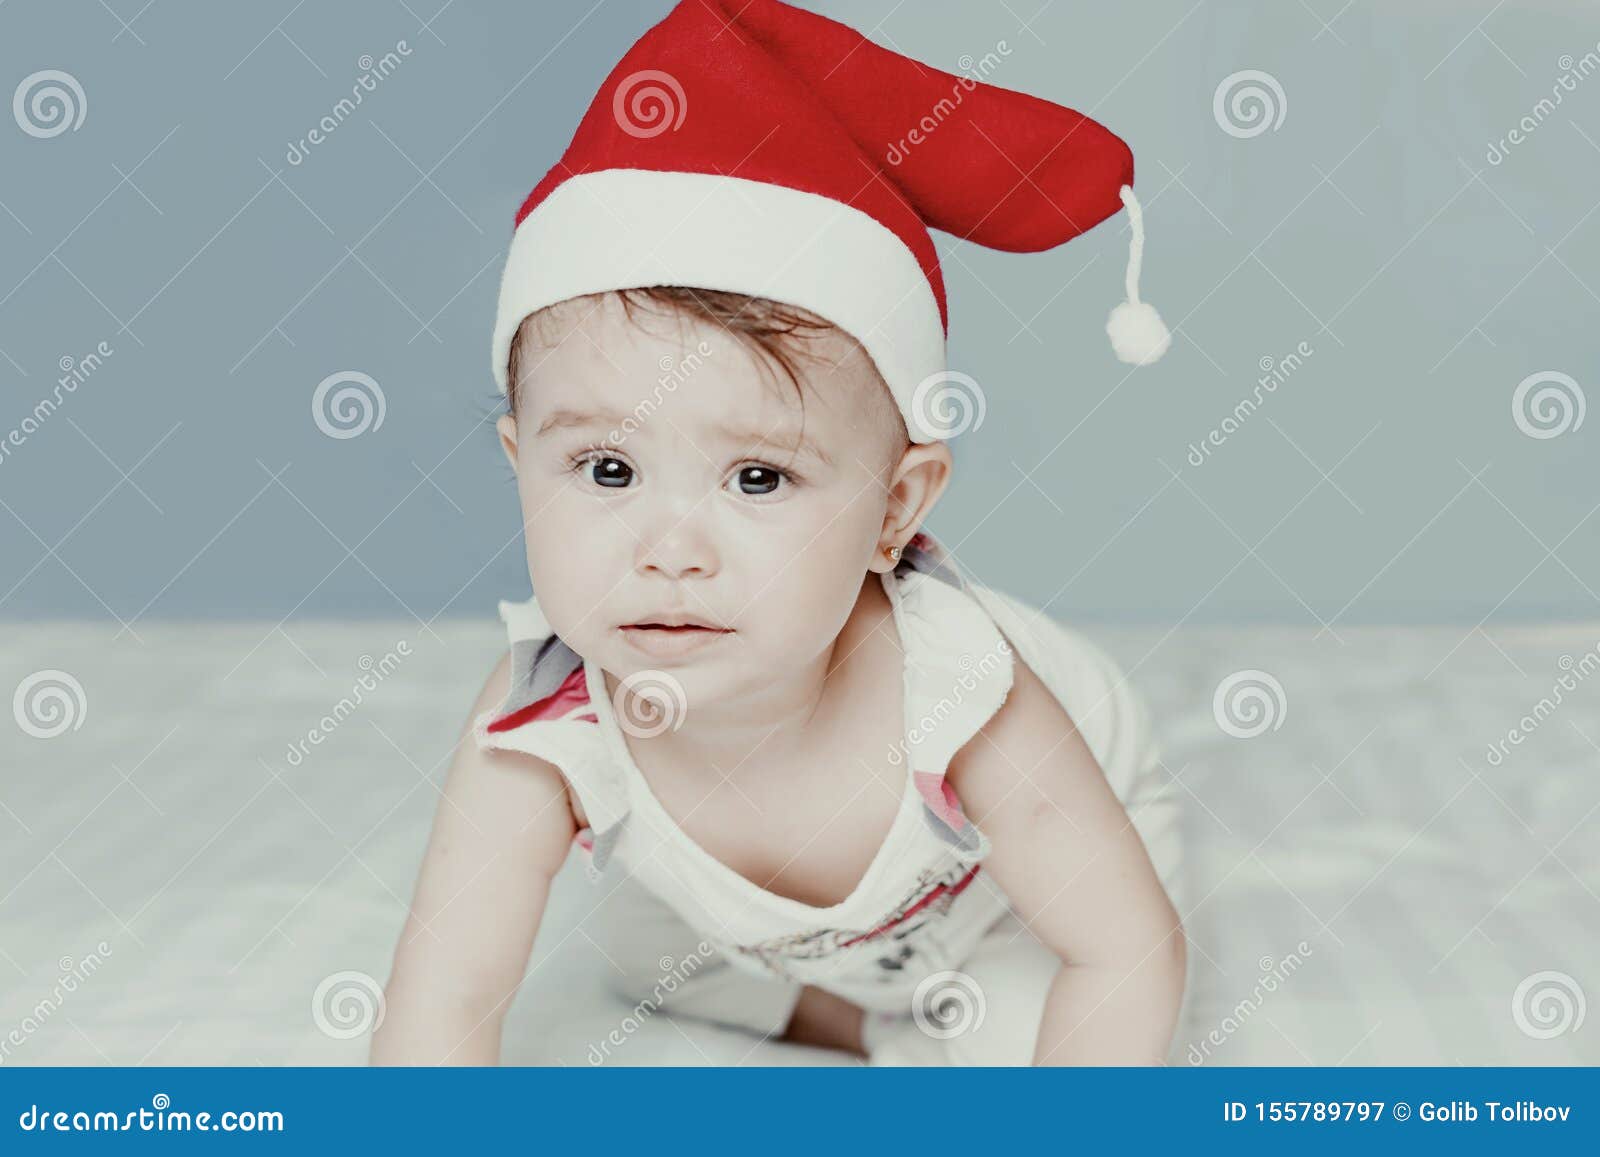 santa claus cap for baby